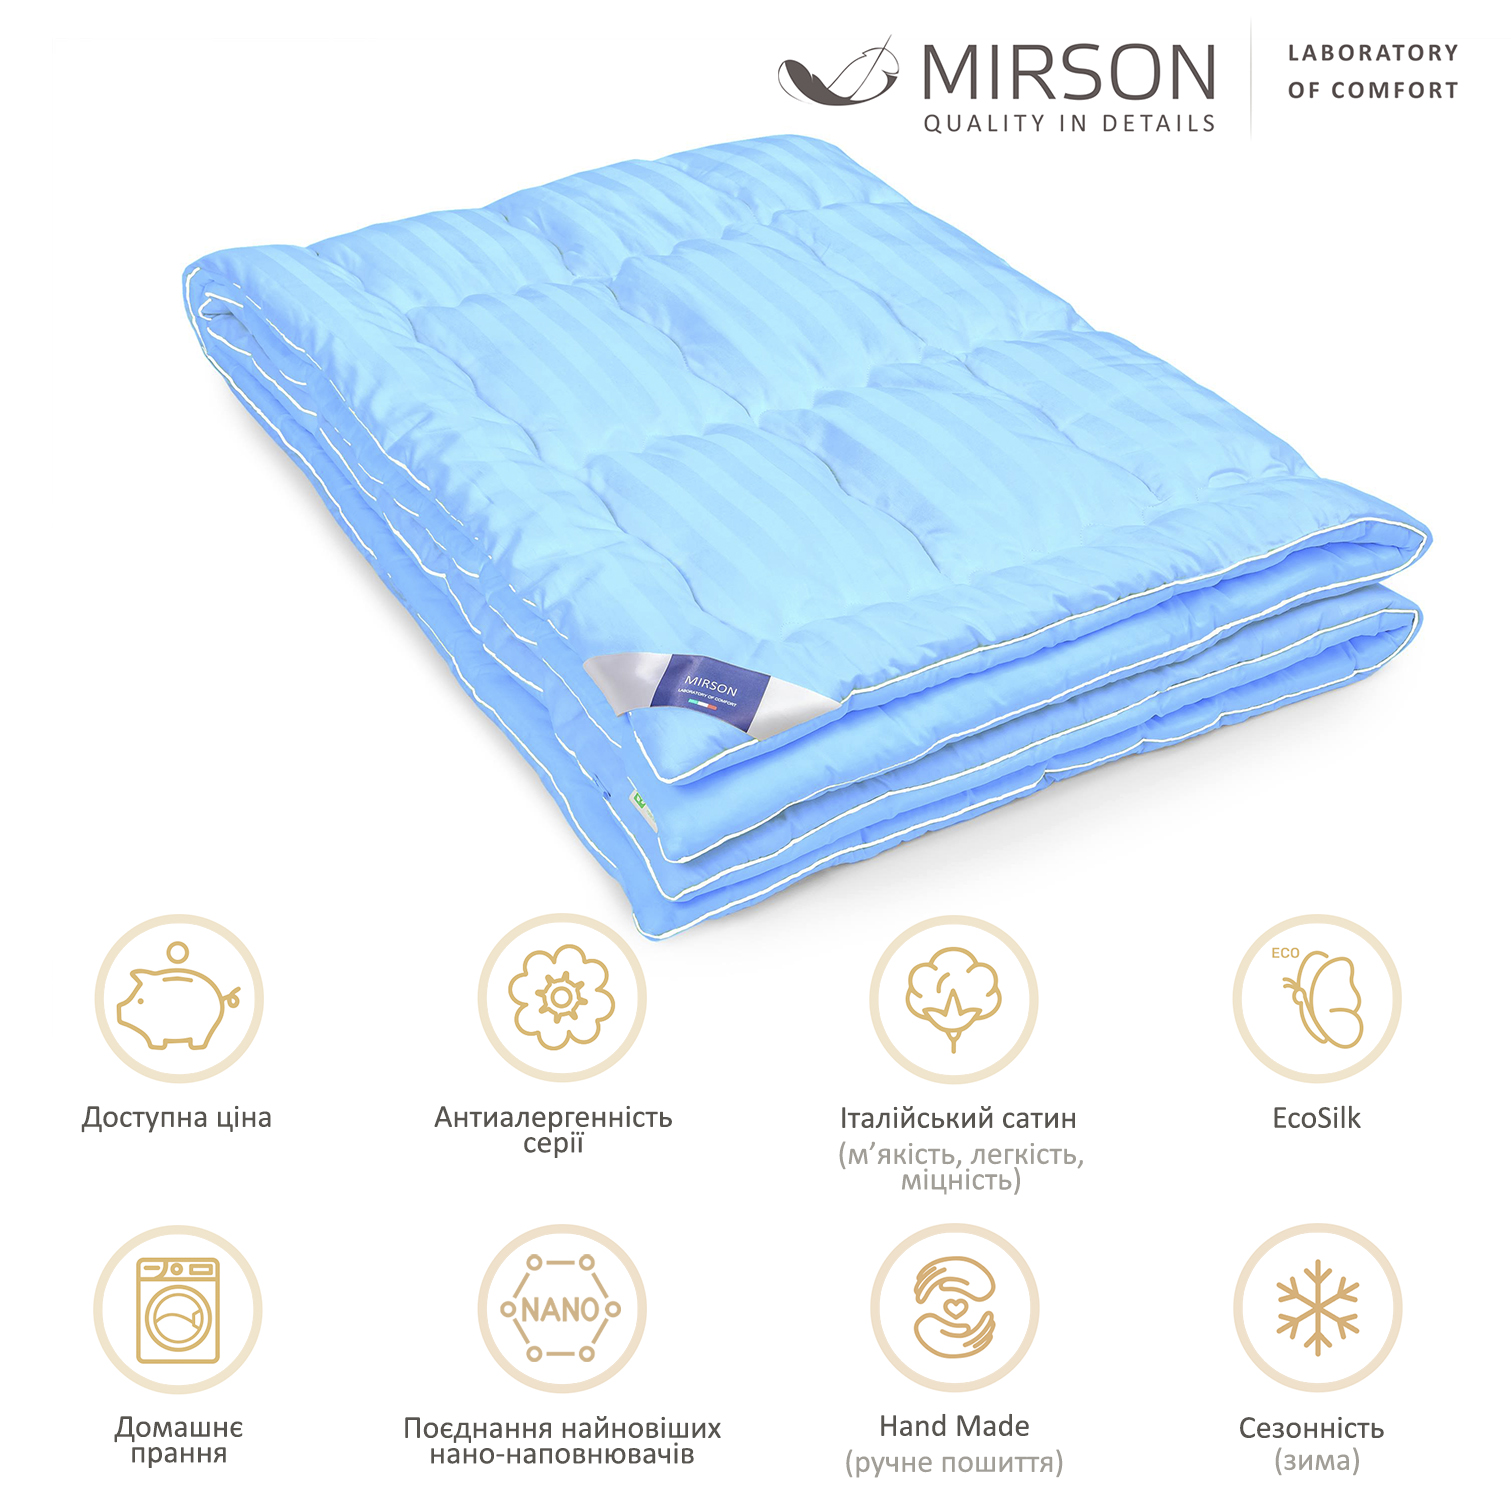 Одеяло антиаллергенное MirSon Valentino Premium Hand Made №067, зимнее, 172x205 см, голубое - фото 5